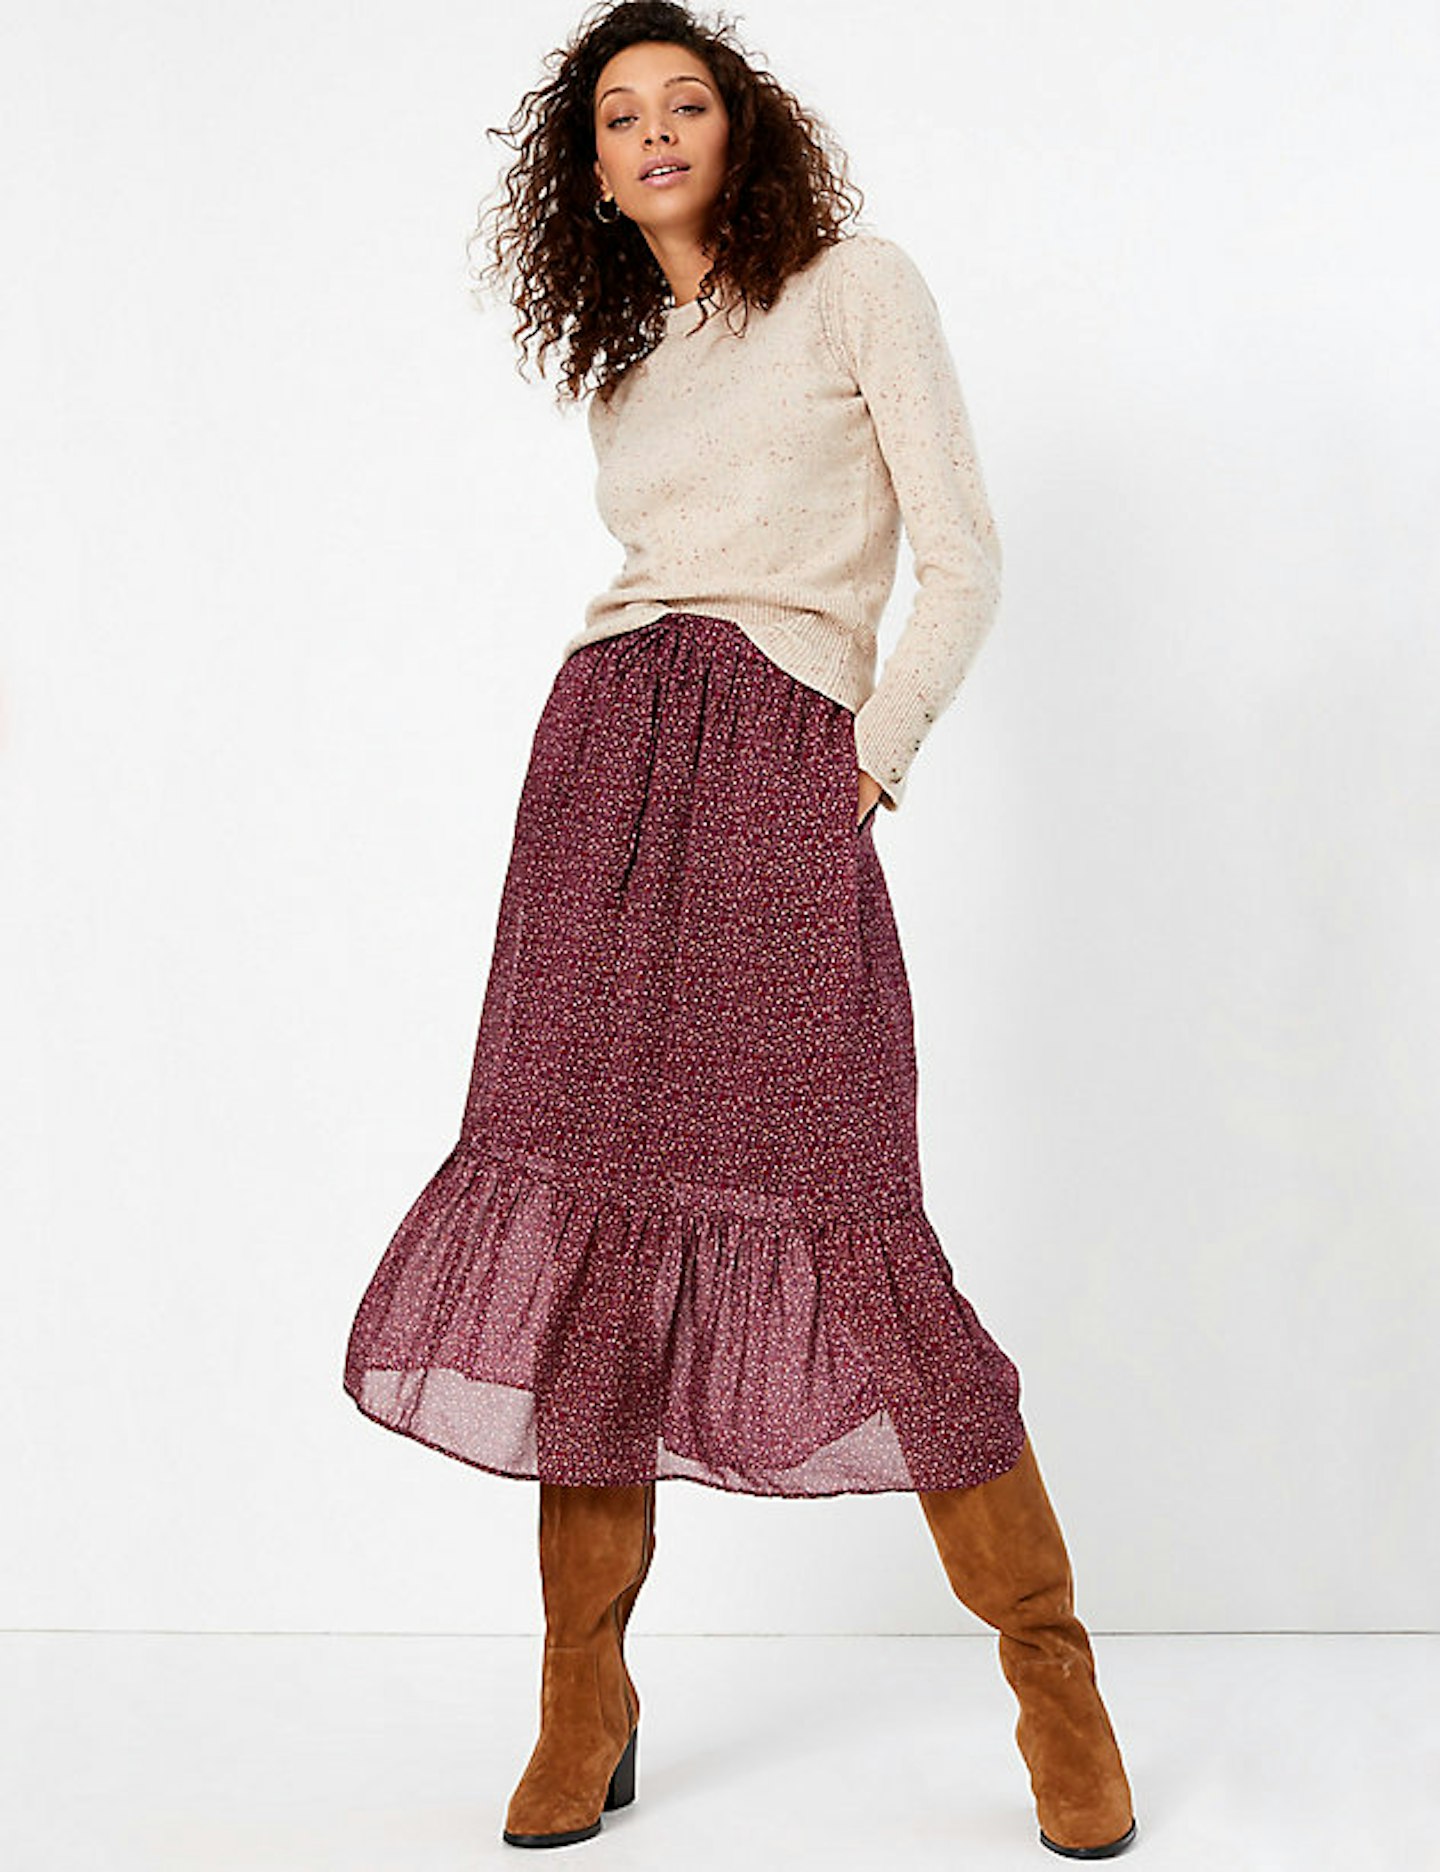 Tiered Midi Skirt, £39.50